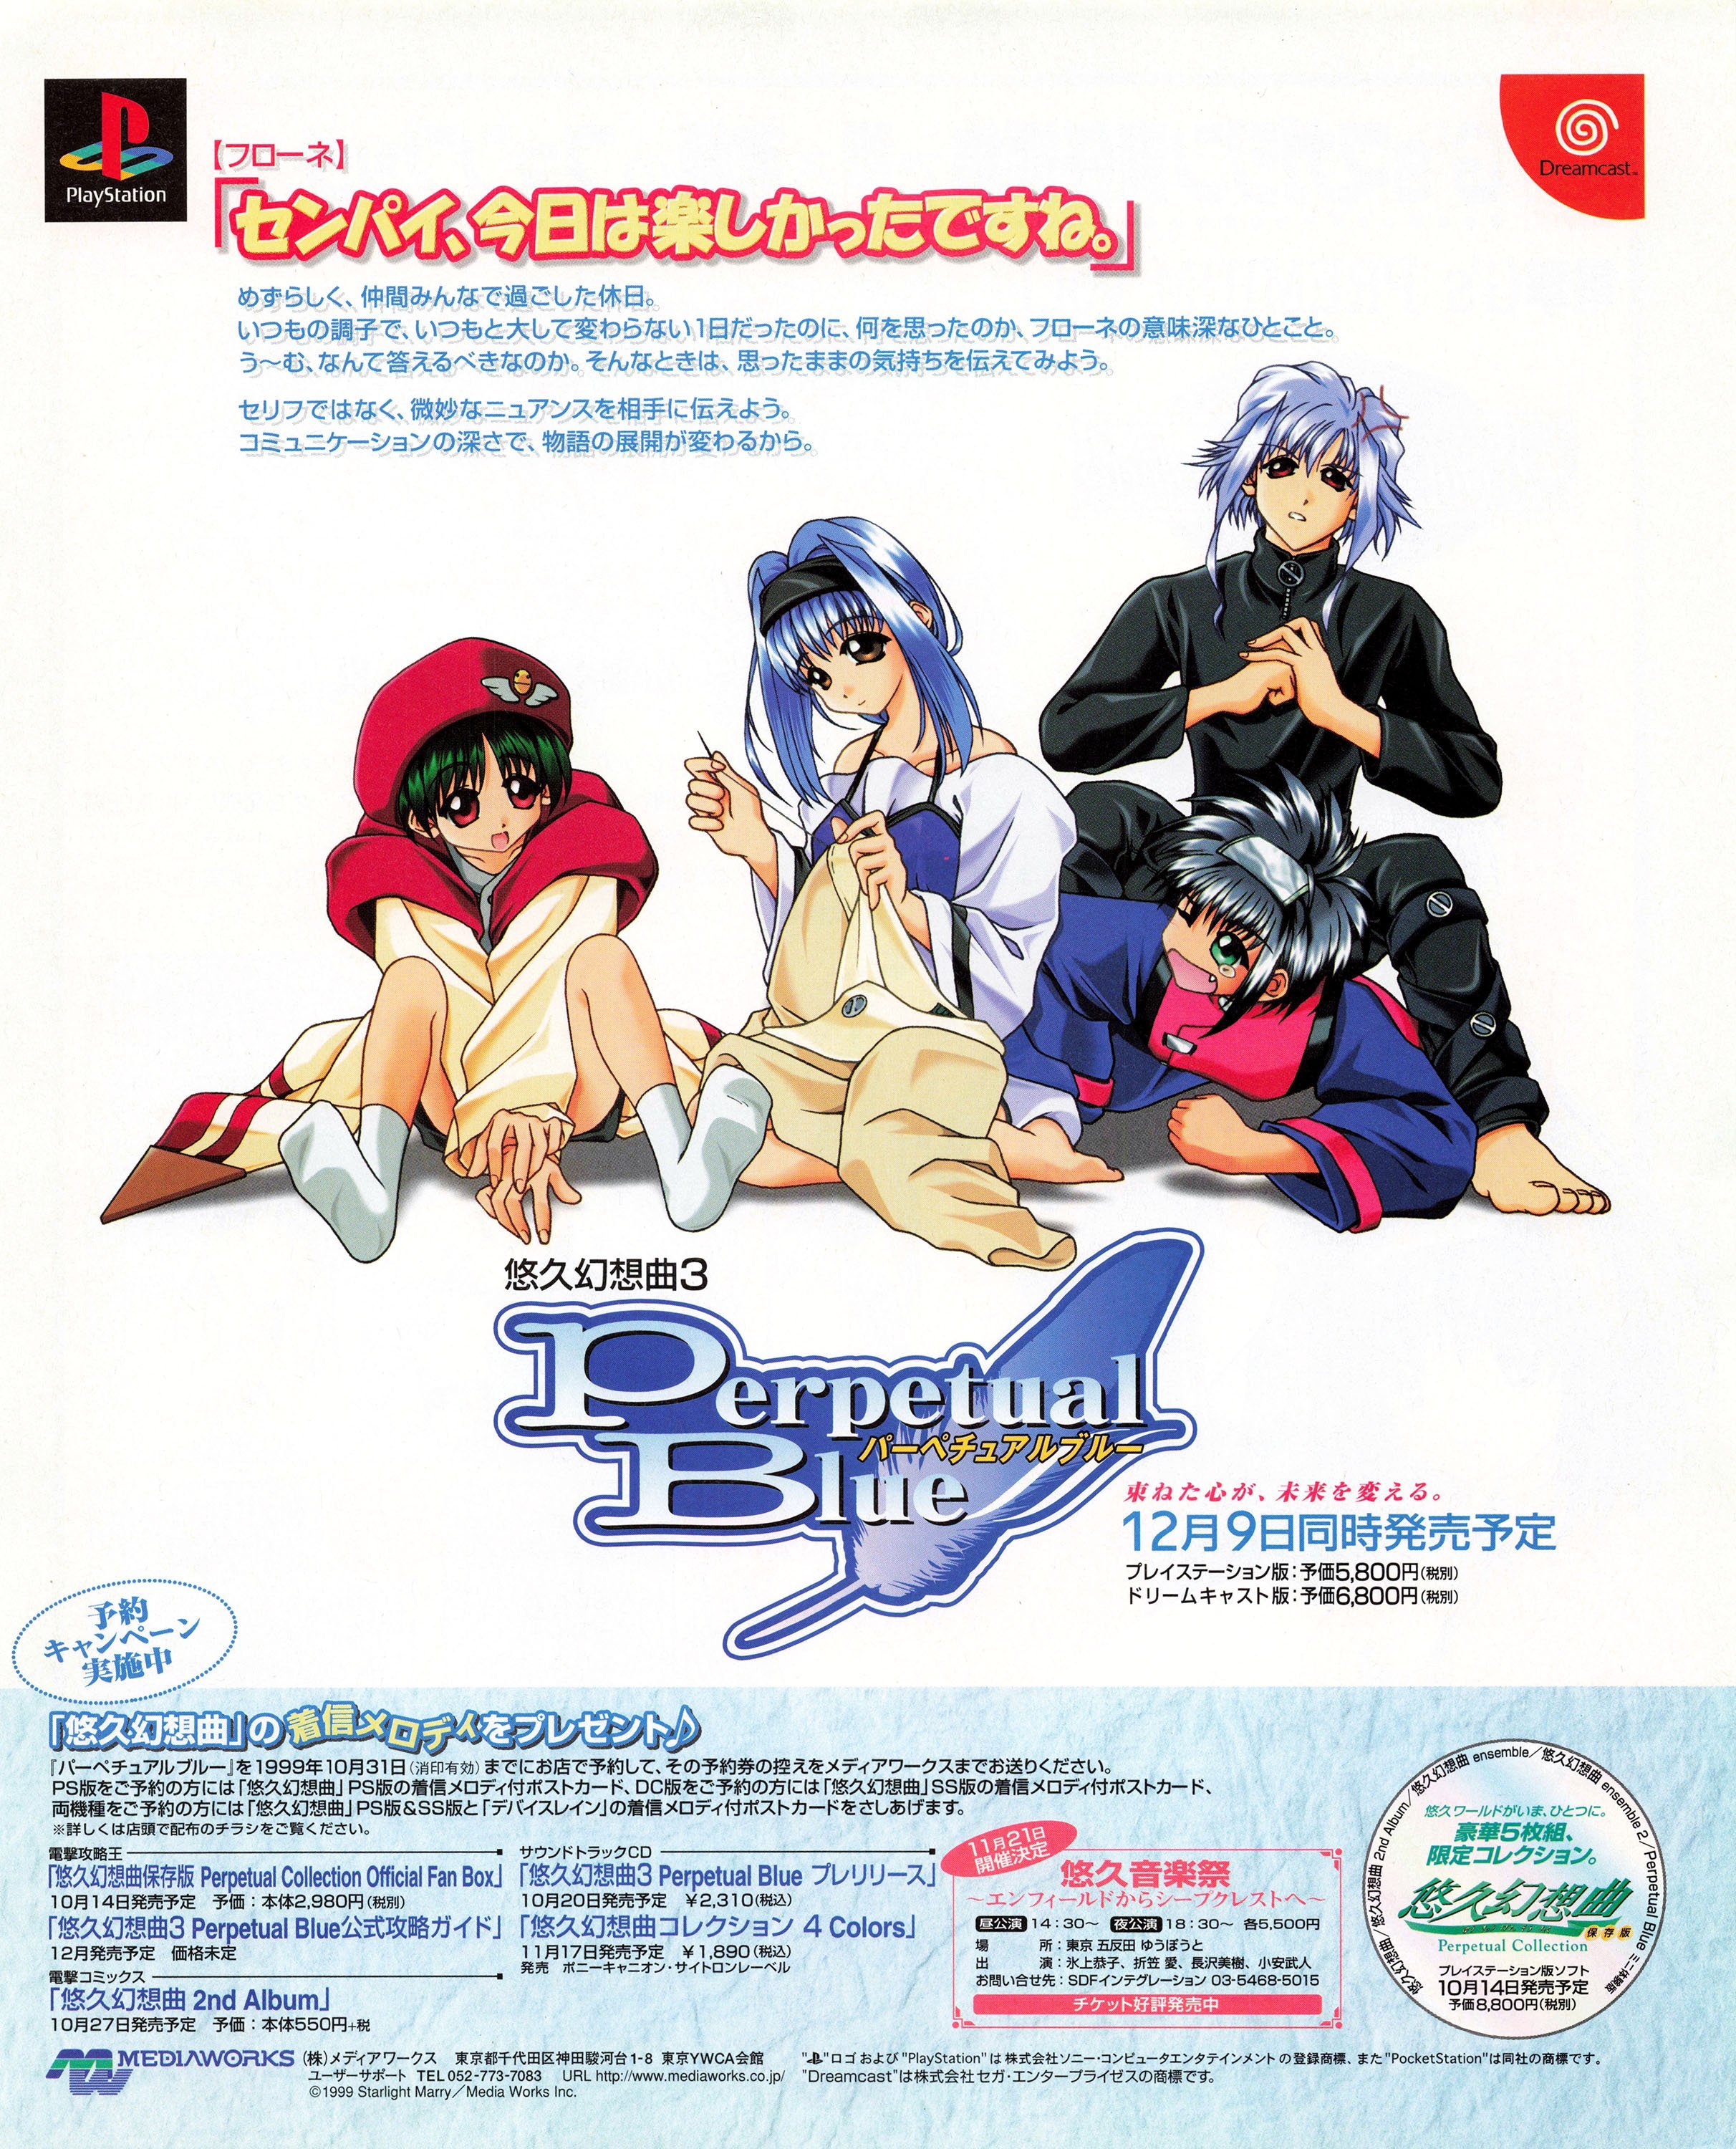 Yuukyuu Gensokyoku 3: Perpetual Blue (Japan) (November 1999)